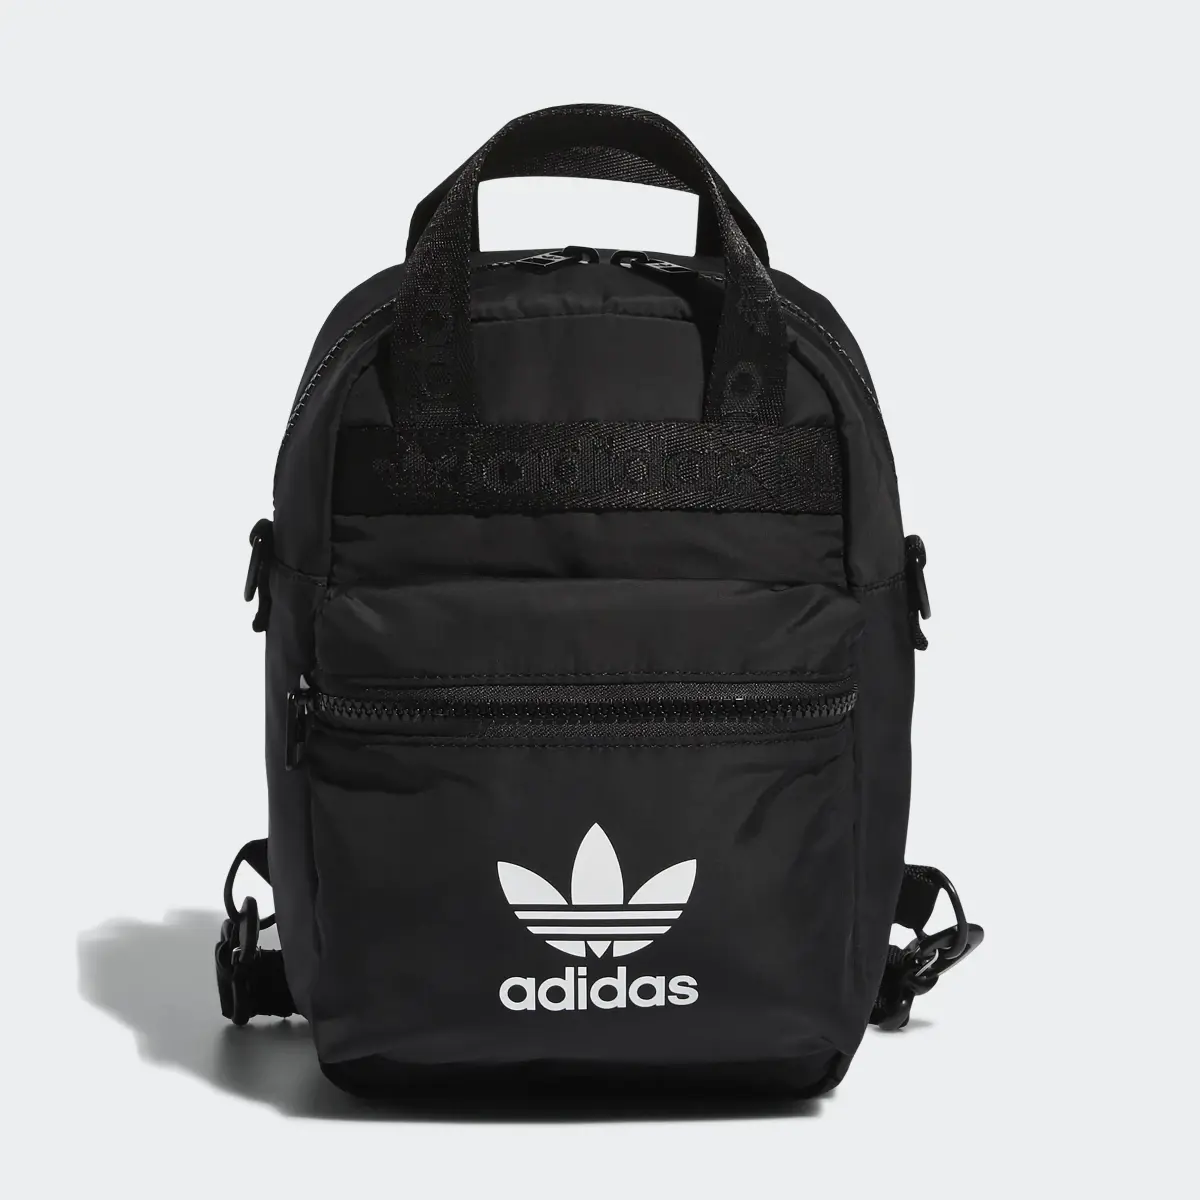 Adidas Micro Mini Backpack. 2